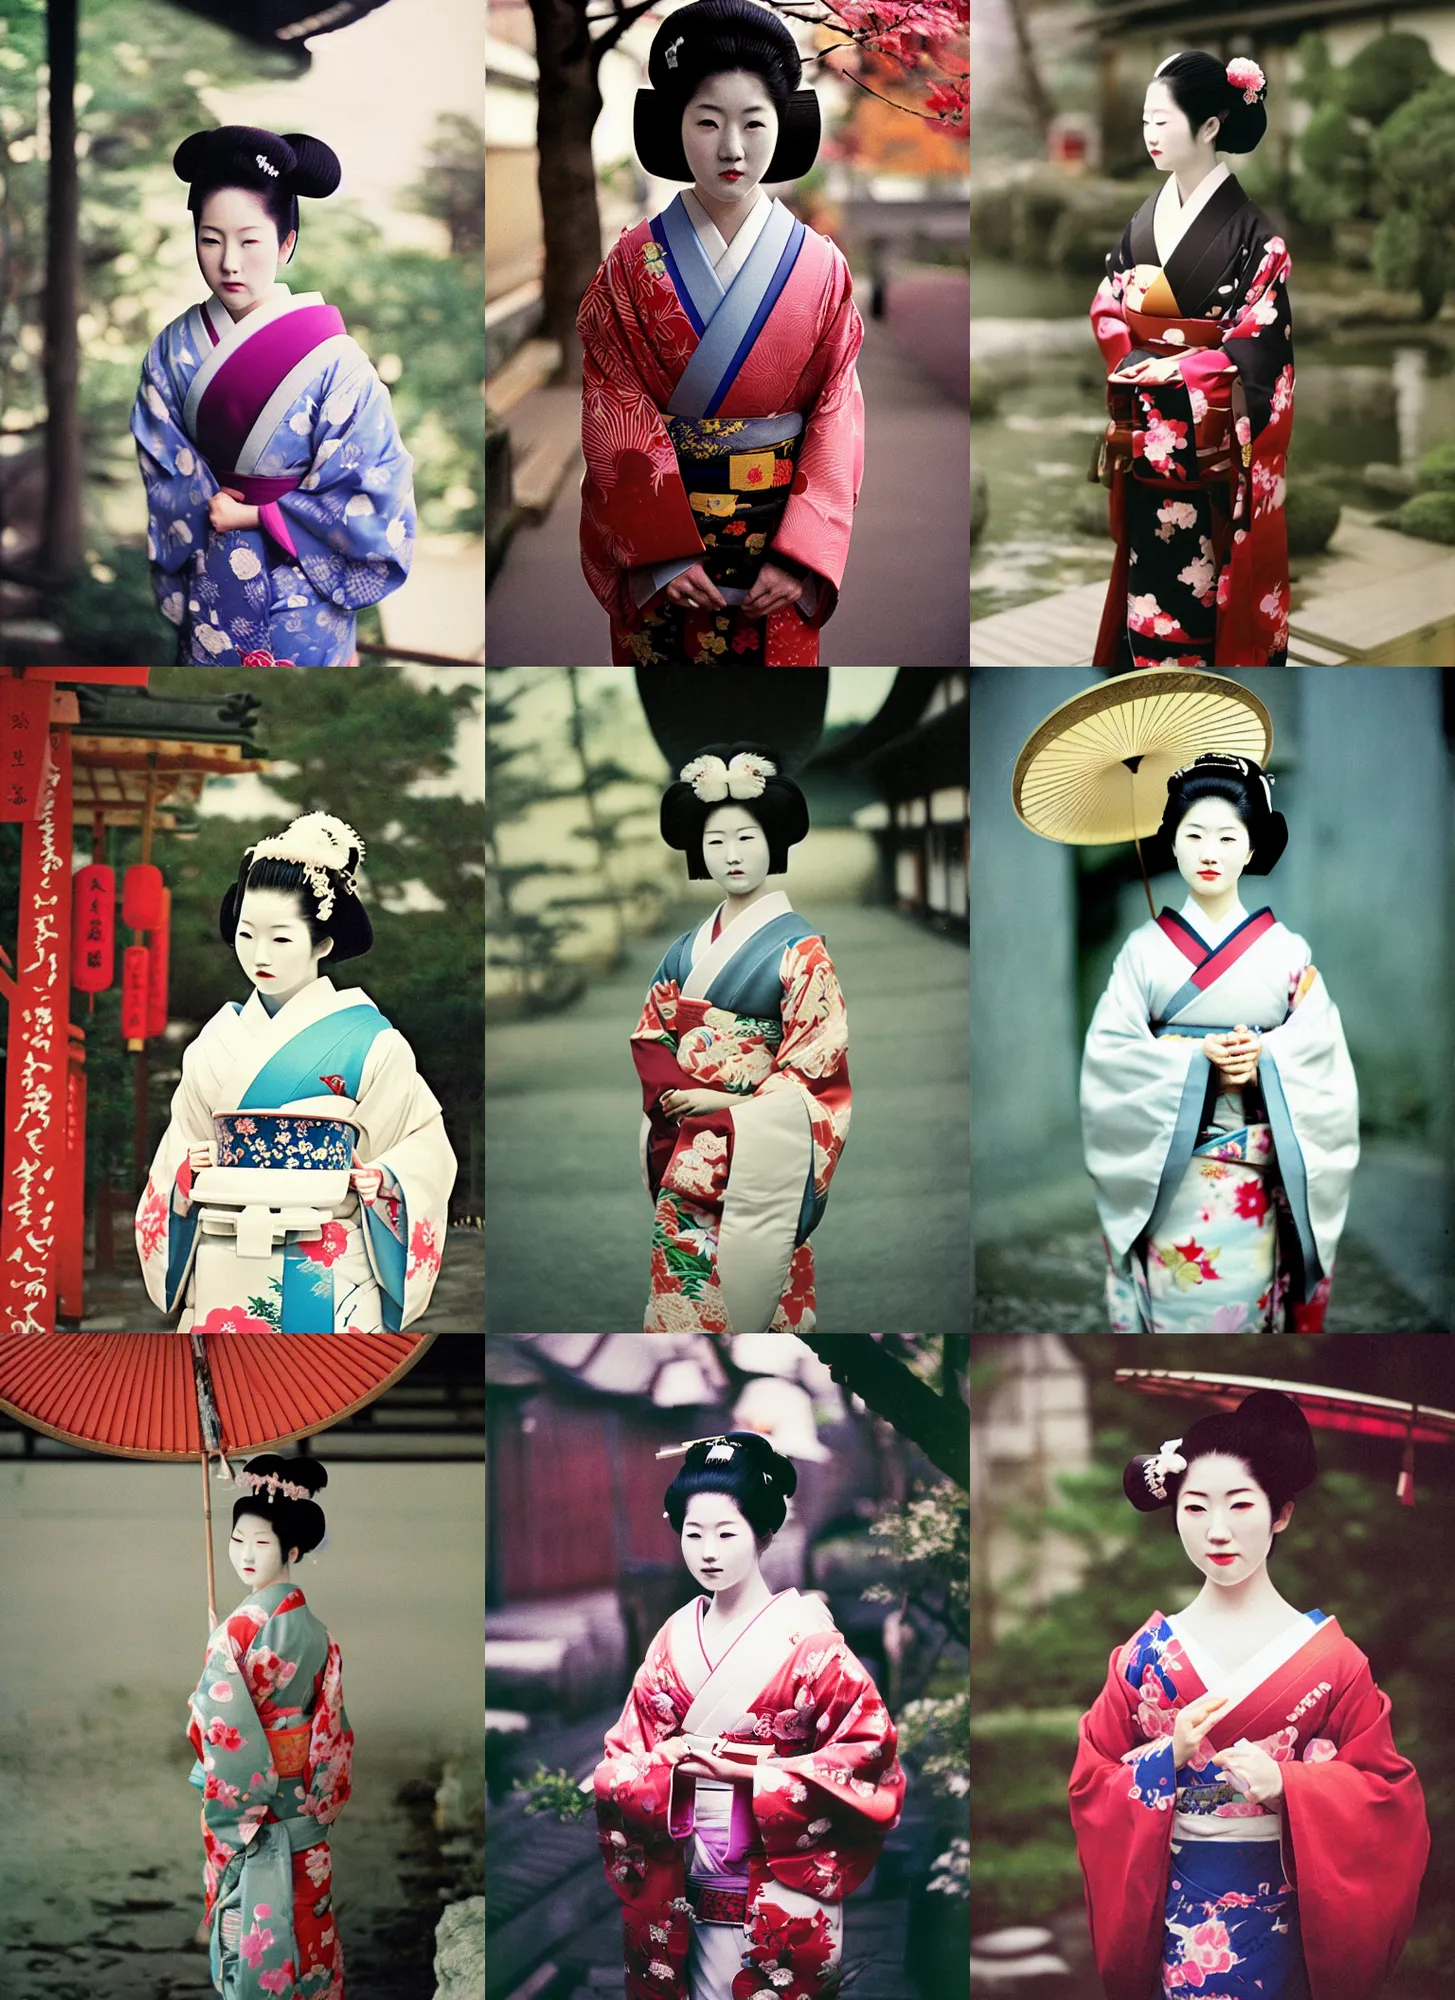 Prompt: Portrait Photograph of a Japanese Geisha Fujicolor True Definition 400